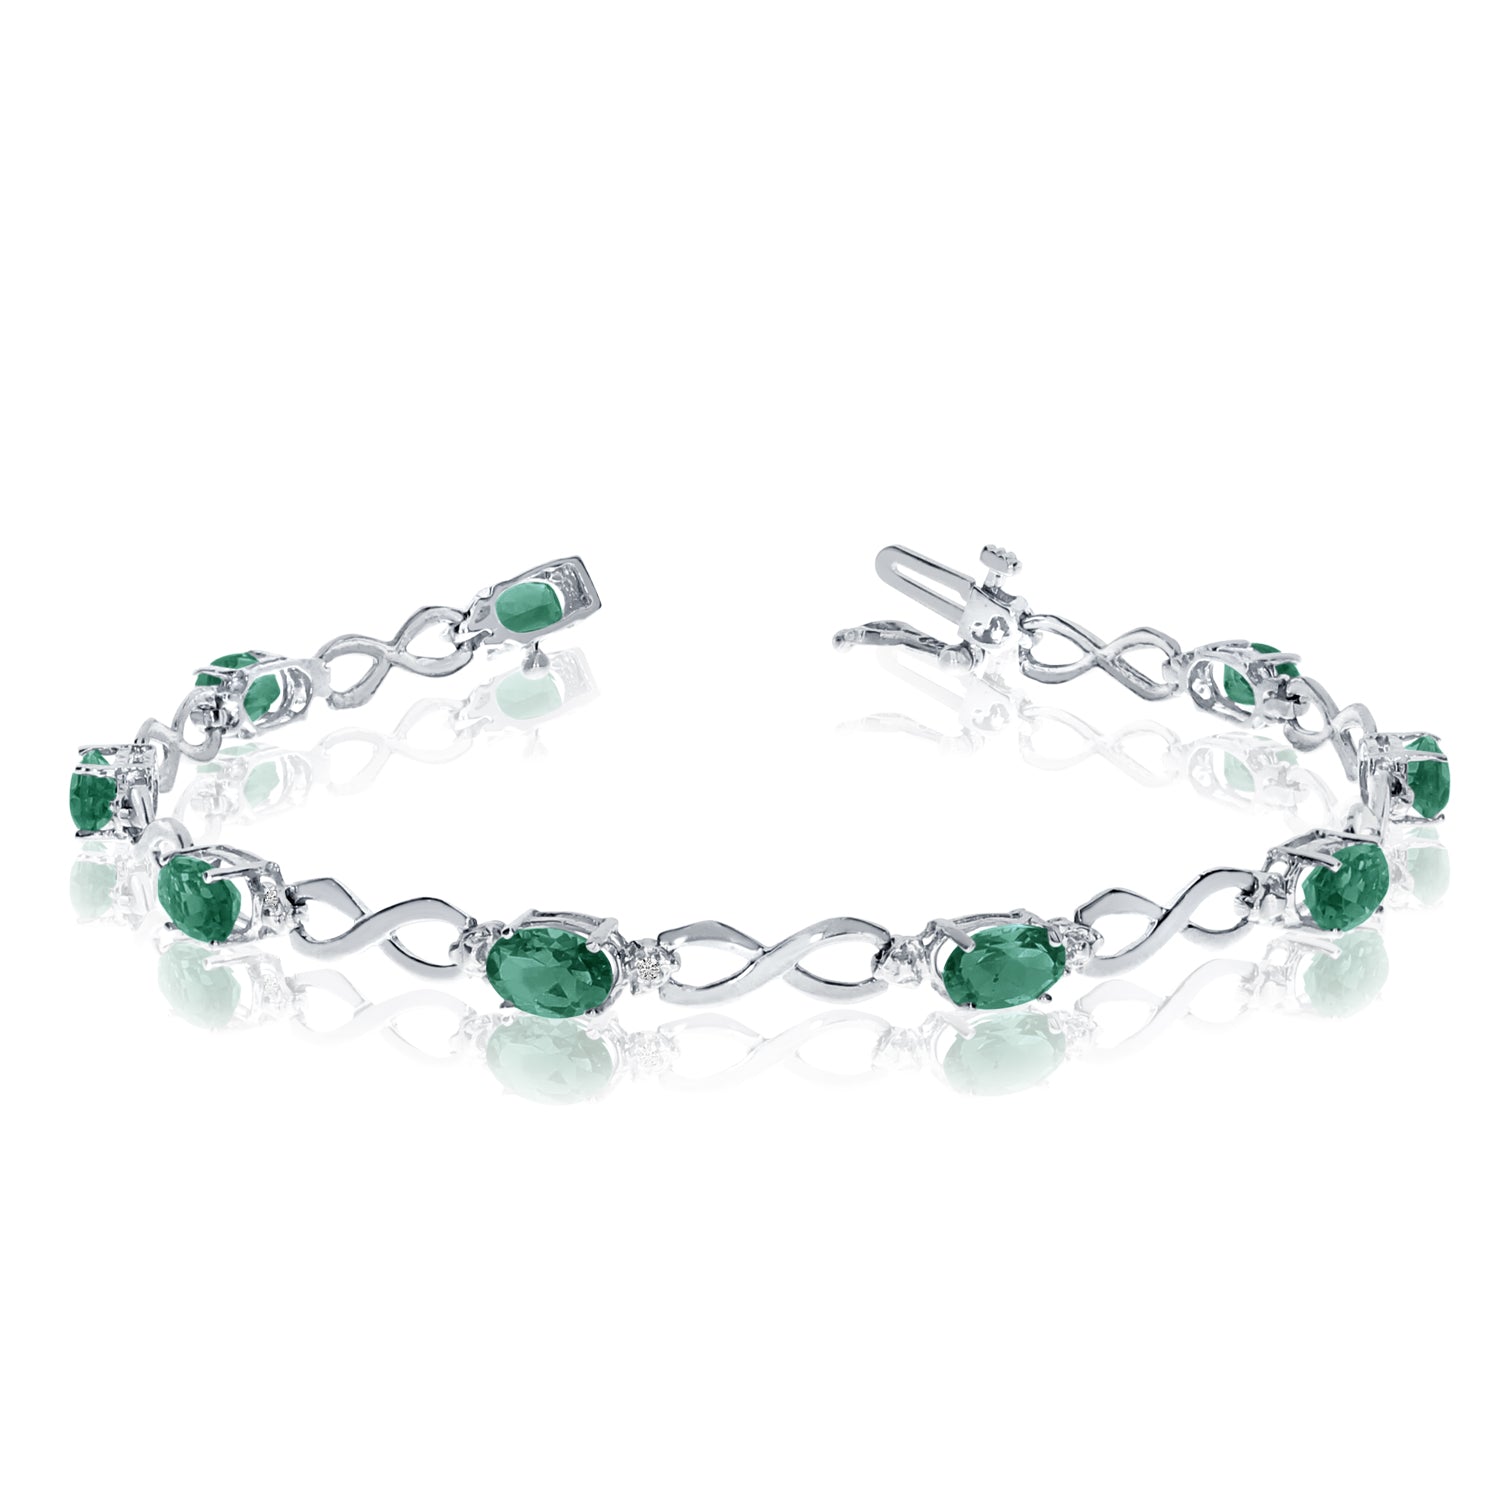 10K White Gold Oval Emerald Stones And Diamonds Infinity Tennis Bracelet, 7" fine designer jewelry for men and women